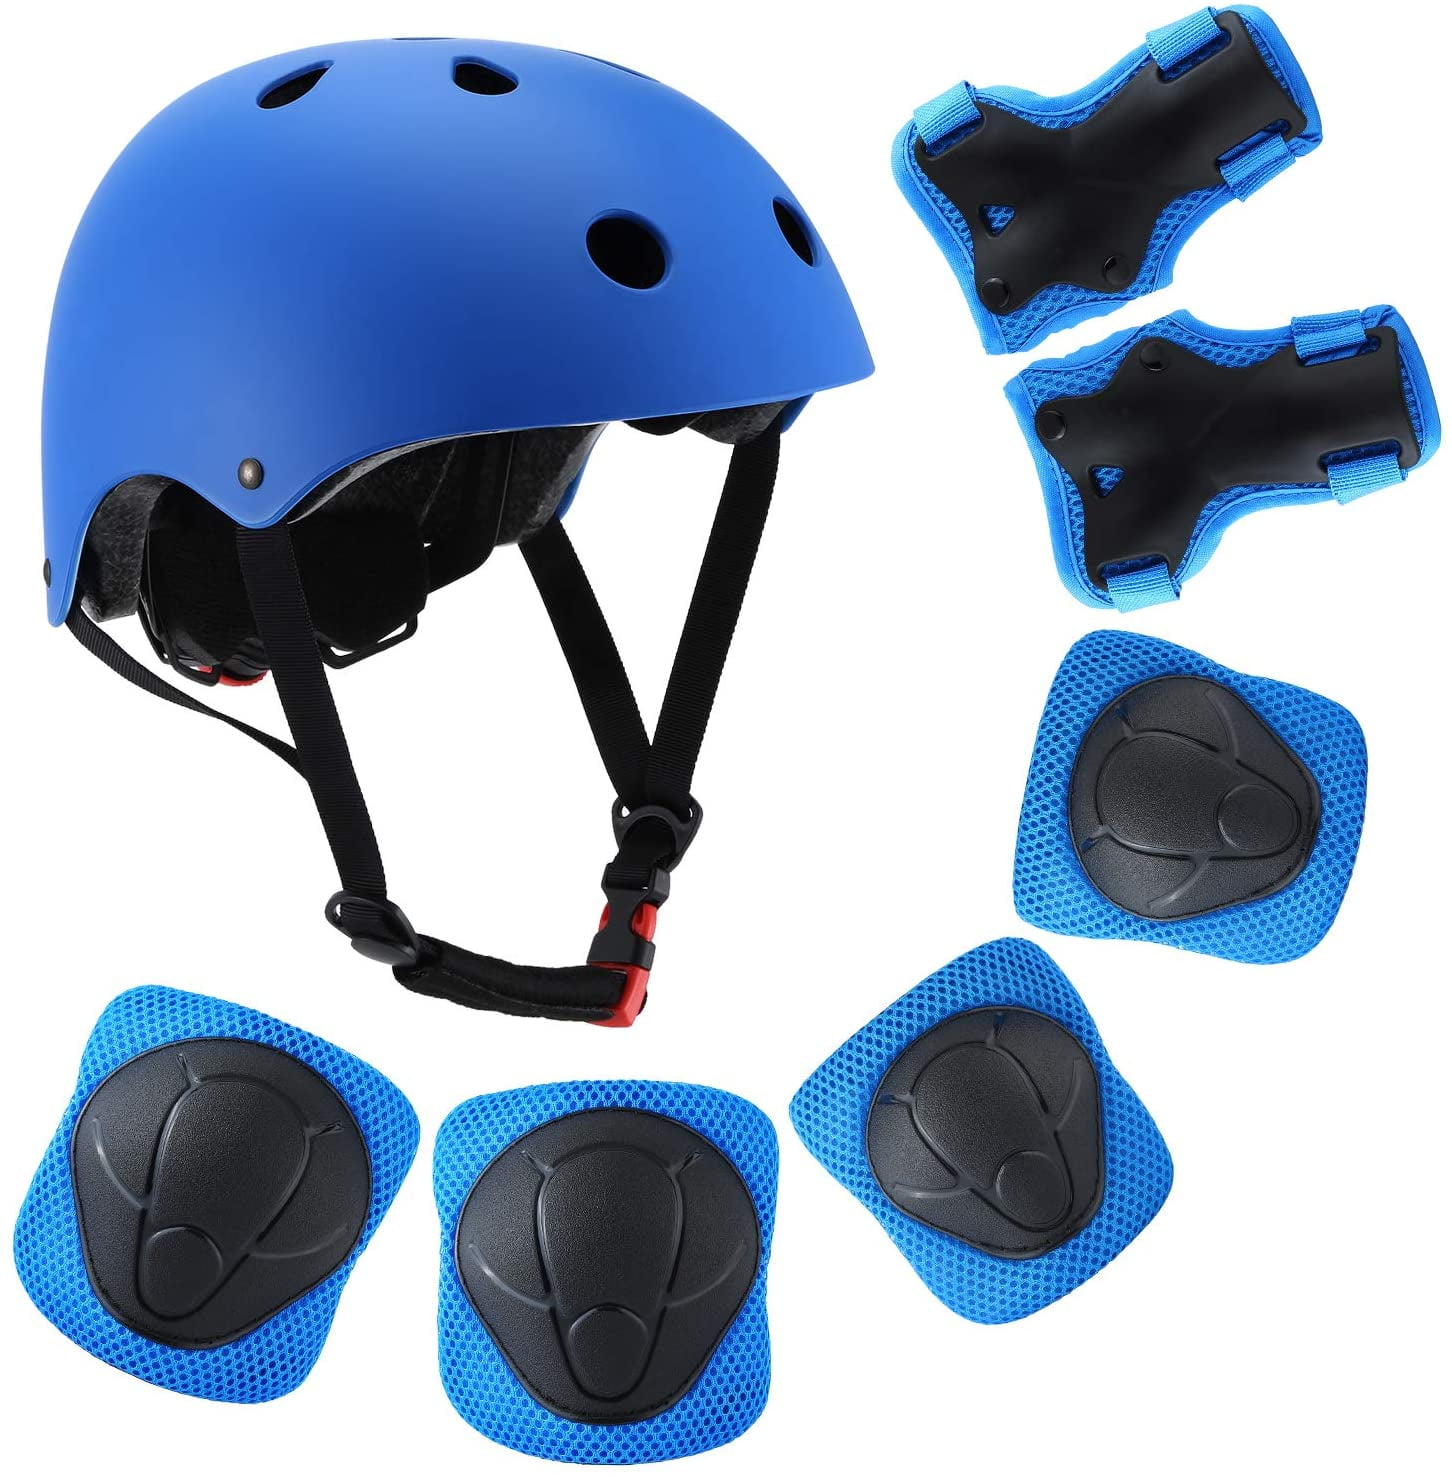 Protective Gear Set Knee Elbow Pads Wrist Guards Helmet Kid Skating Cycling B6S9 